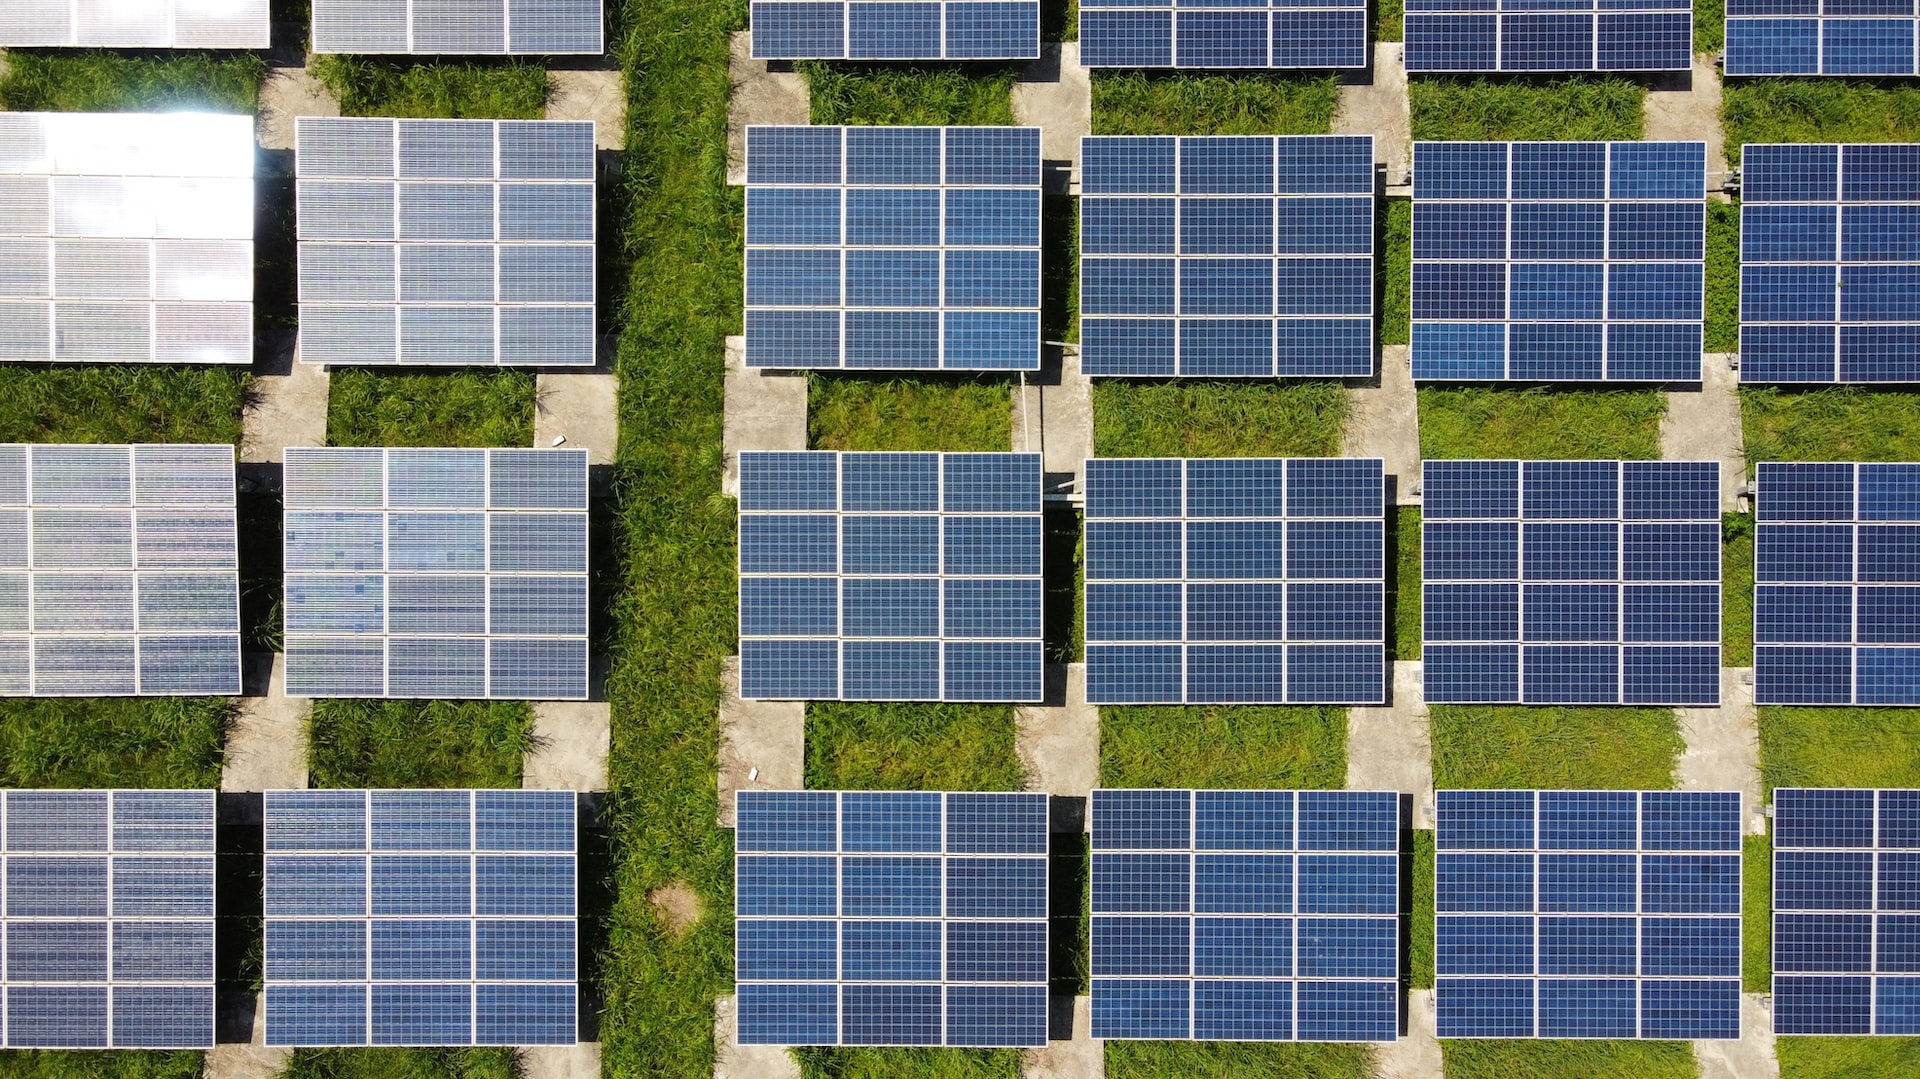 solar panels cost